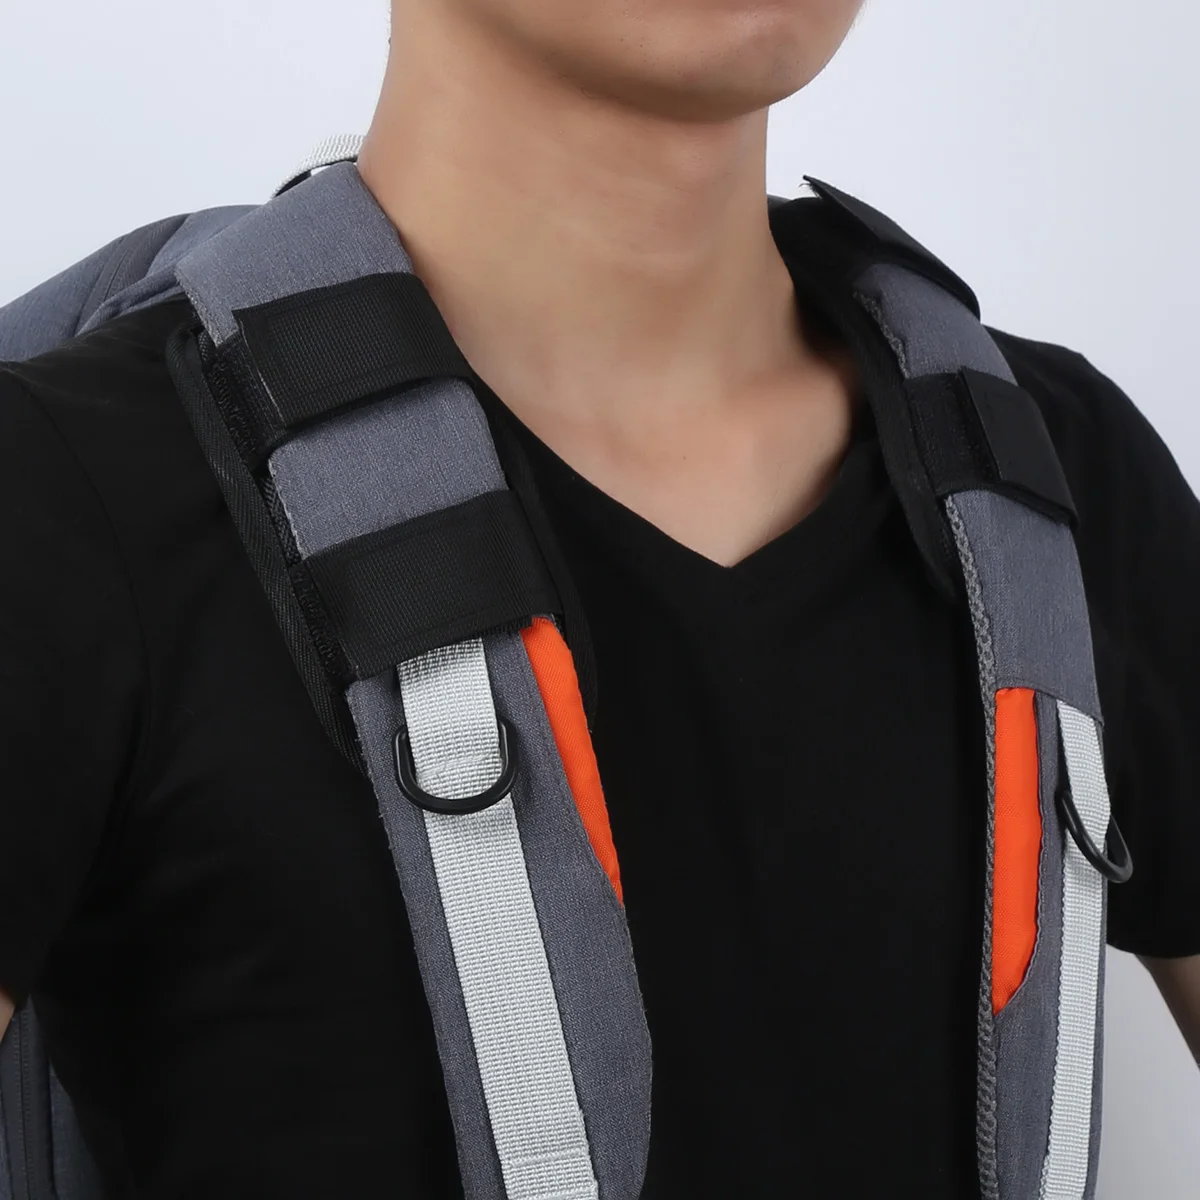 A Pair Mesh Shoulder Strap Belt Pads Fastener Cushions for Bags Backpack Satchel 